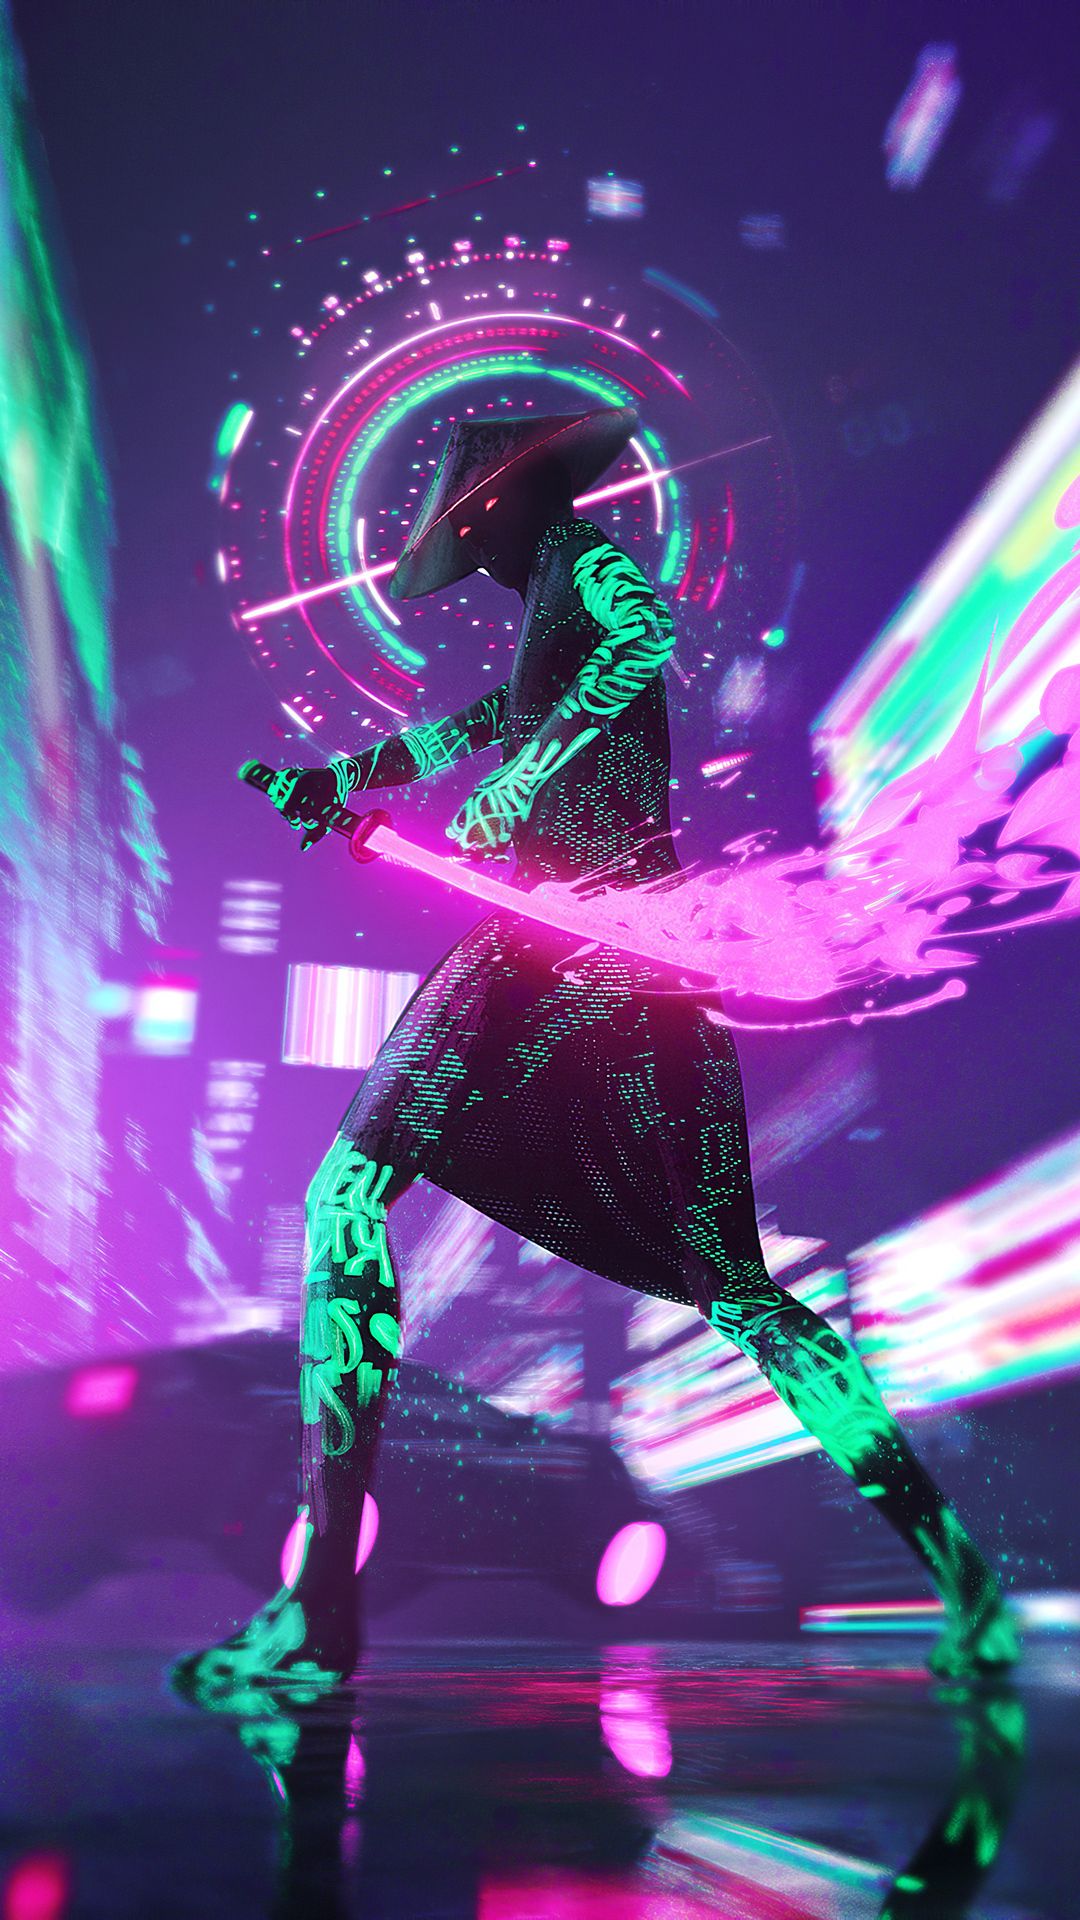 Cyberpunk Neon Wallpaper & Background Beautiful Best Available For Download Cyberpunk Neon Photo Free On Zicxa.com Image